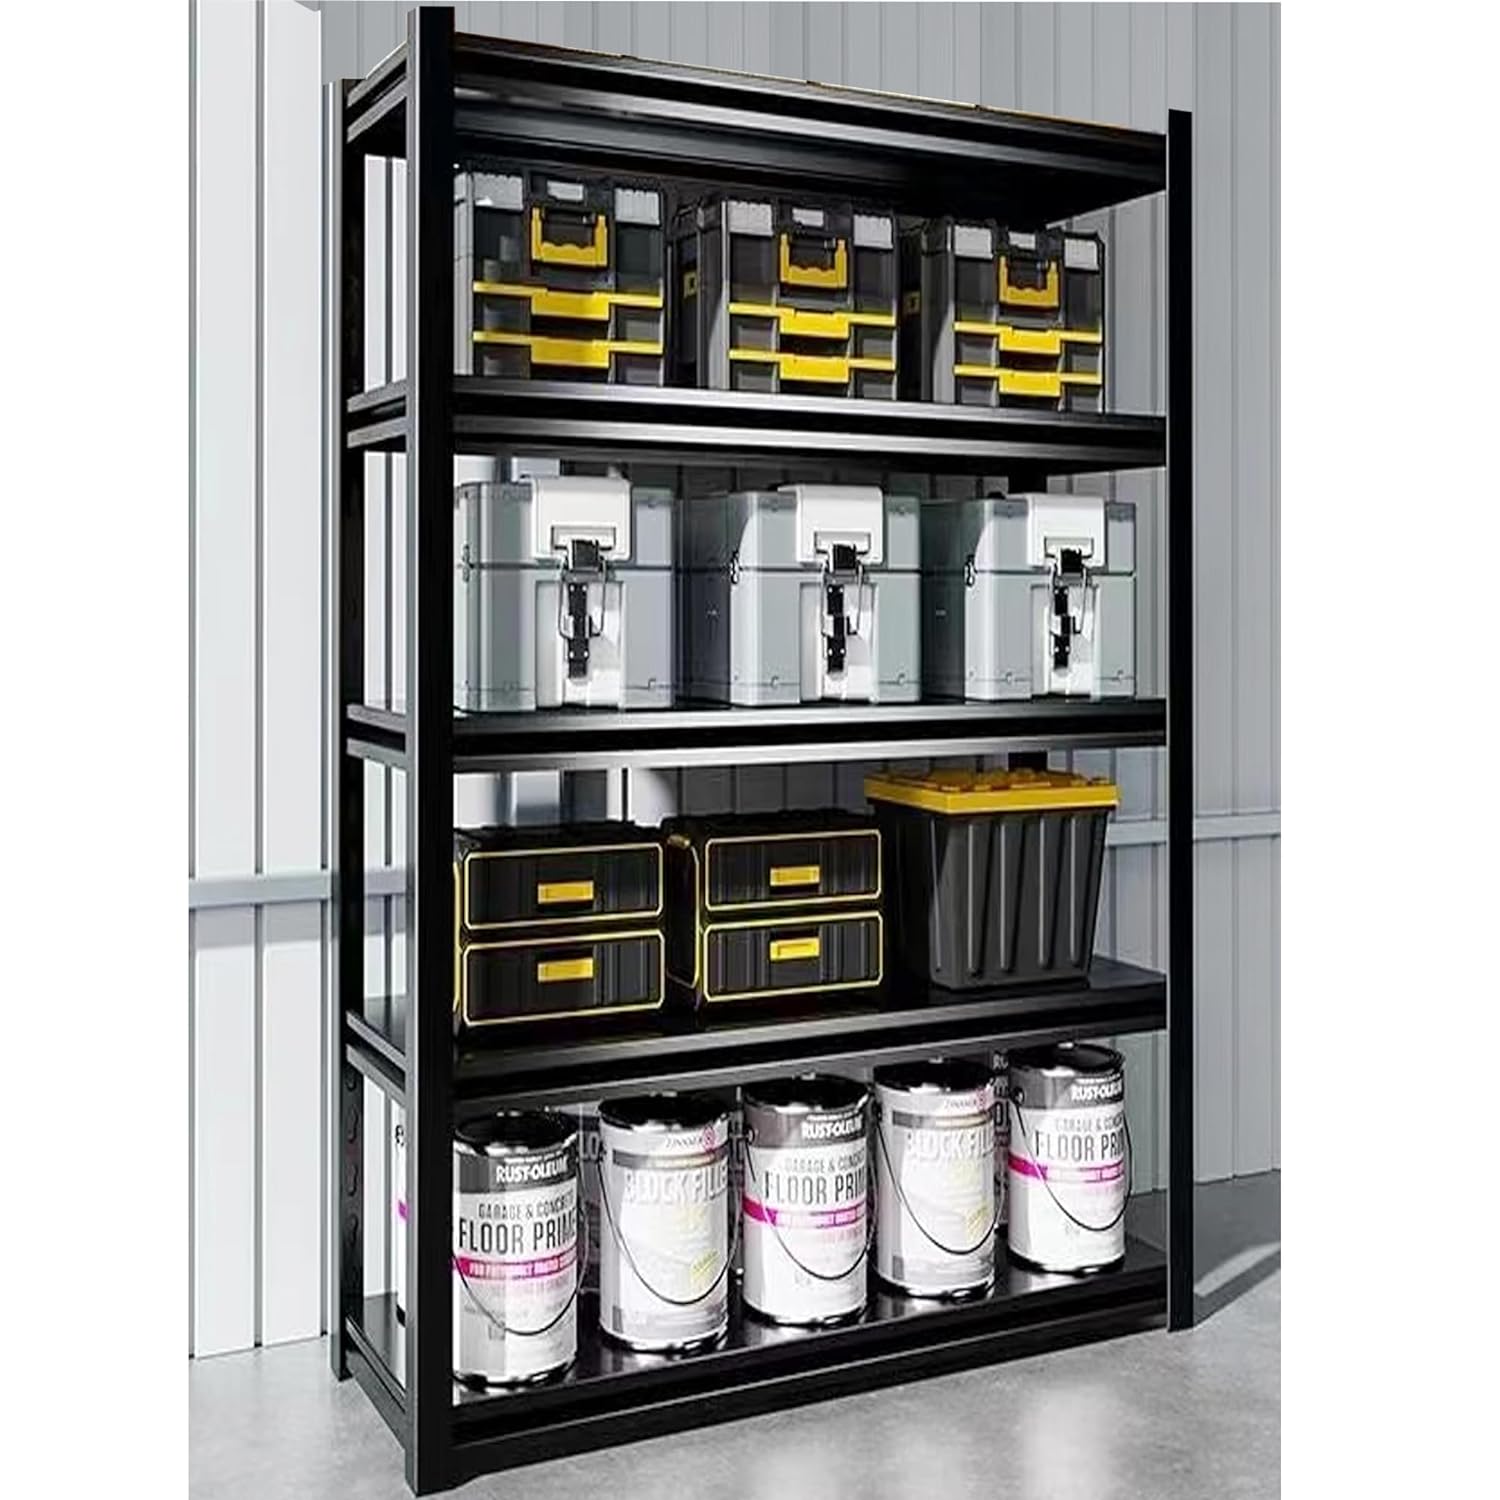 thinkstar 5 Tier Utility Shelves Metal Storage Shelves Garage Shelving Unit Adjustable Garage Storage Shelves Storage Racks Heavy Du…